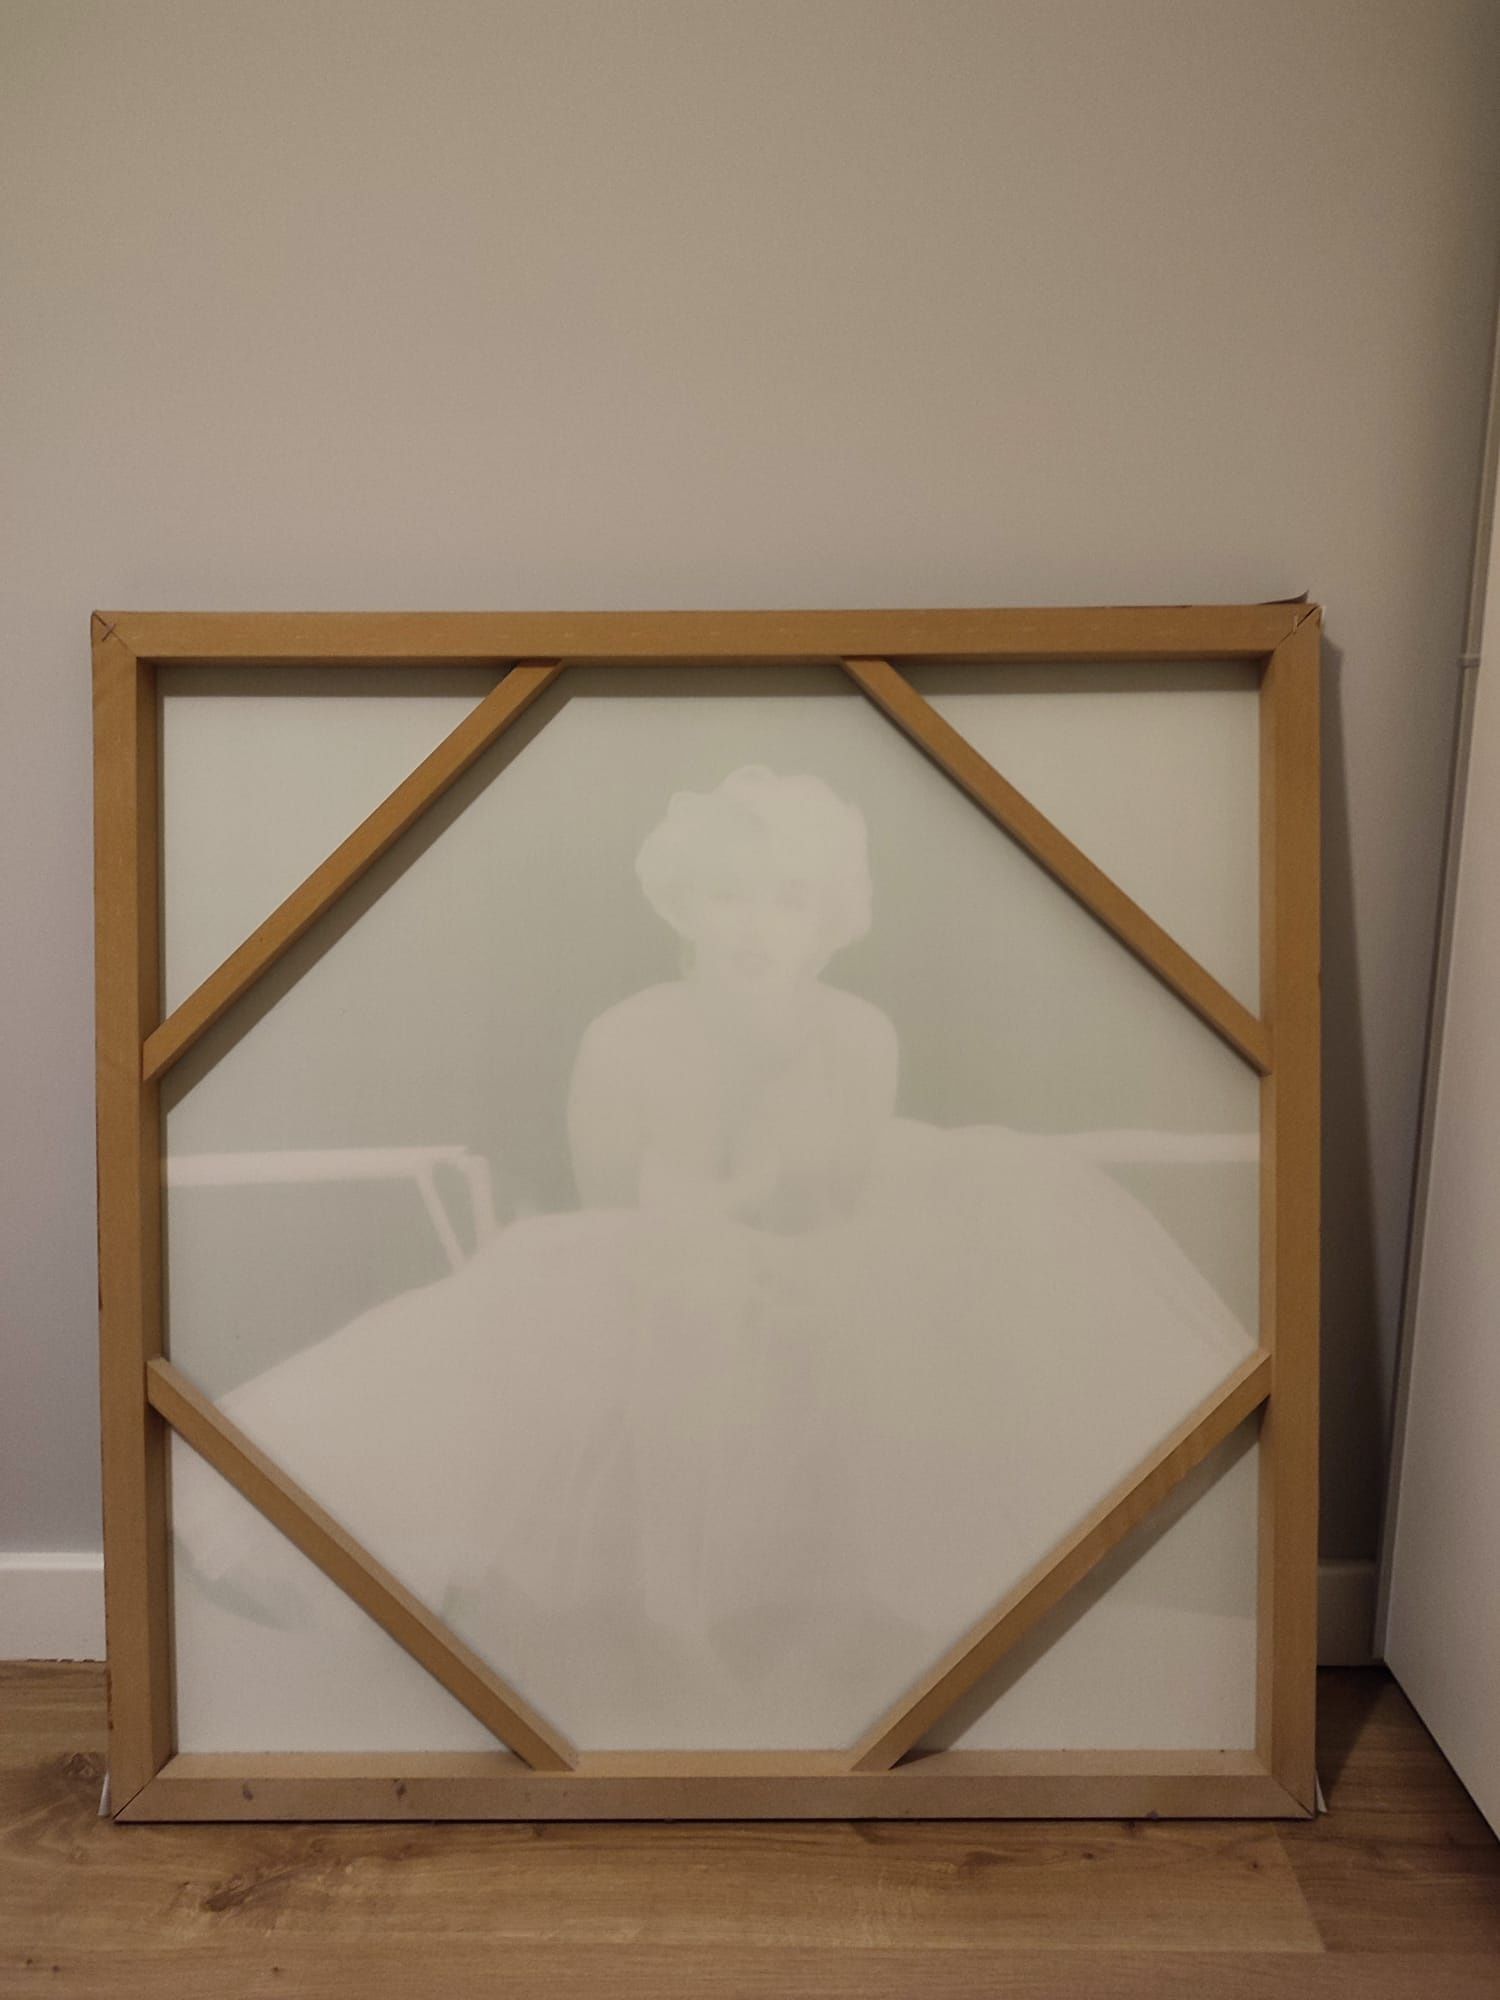 Obraz Kanwa Marylin Monroe ok. 80 x 80 cm